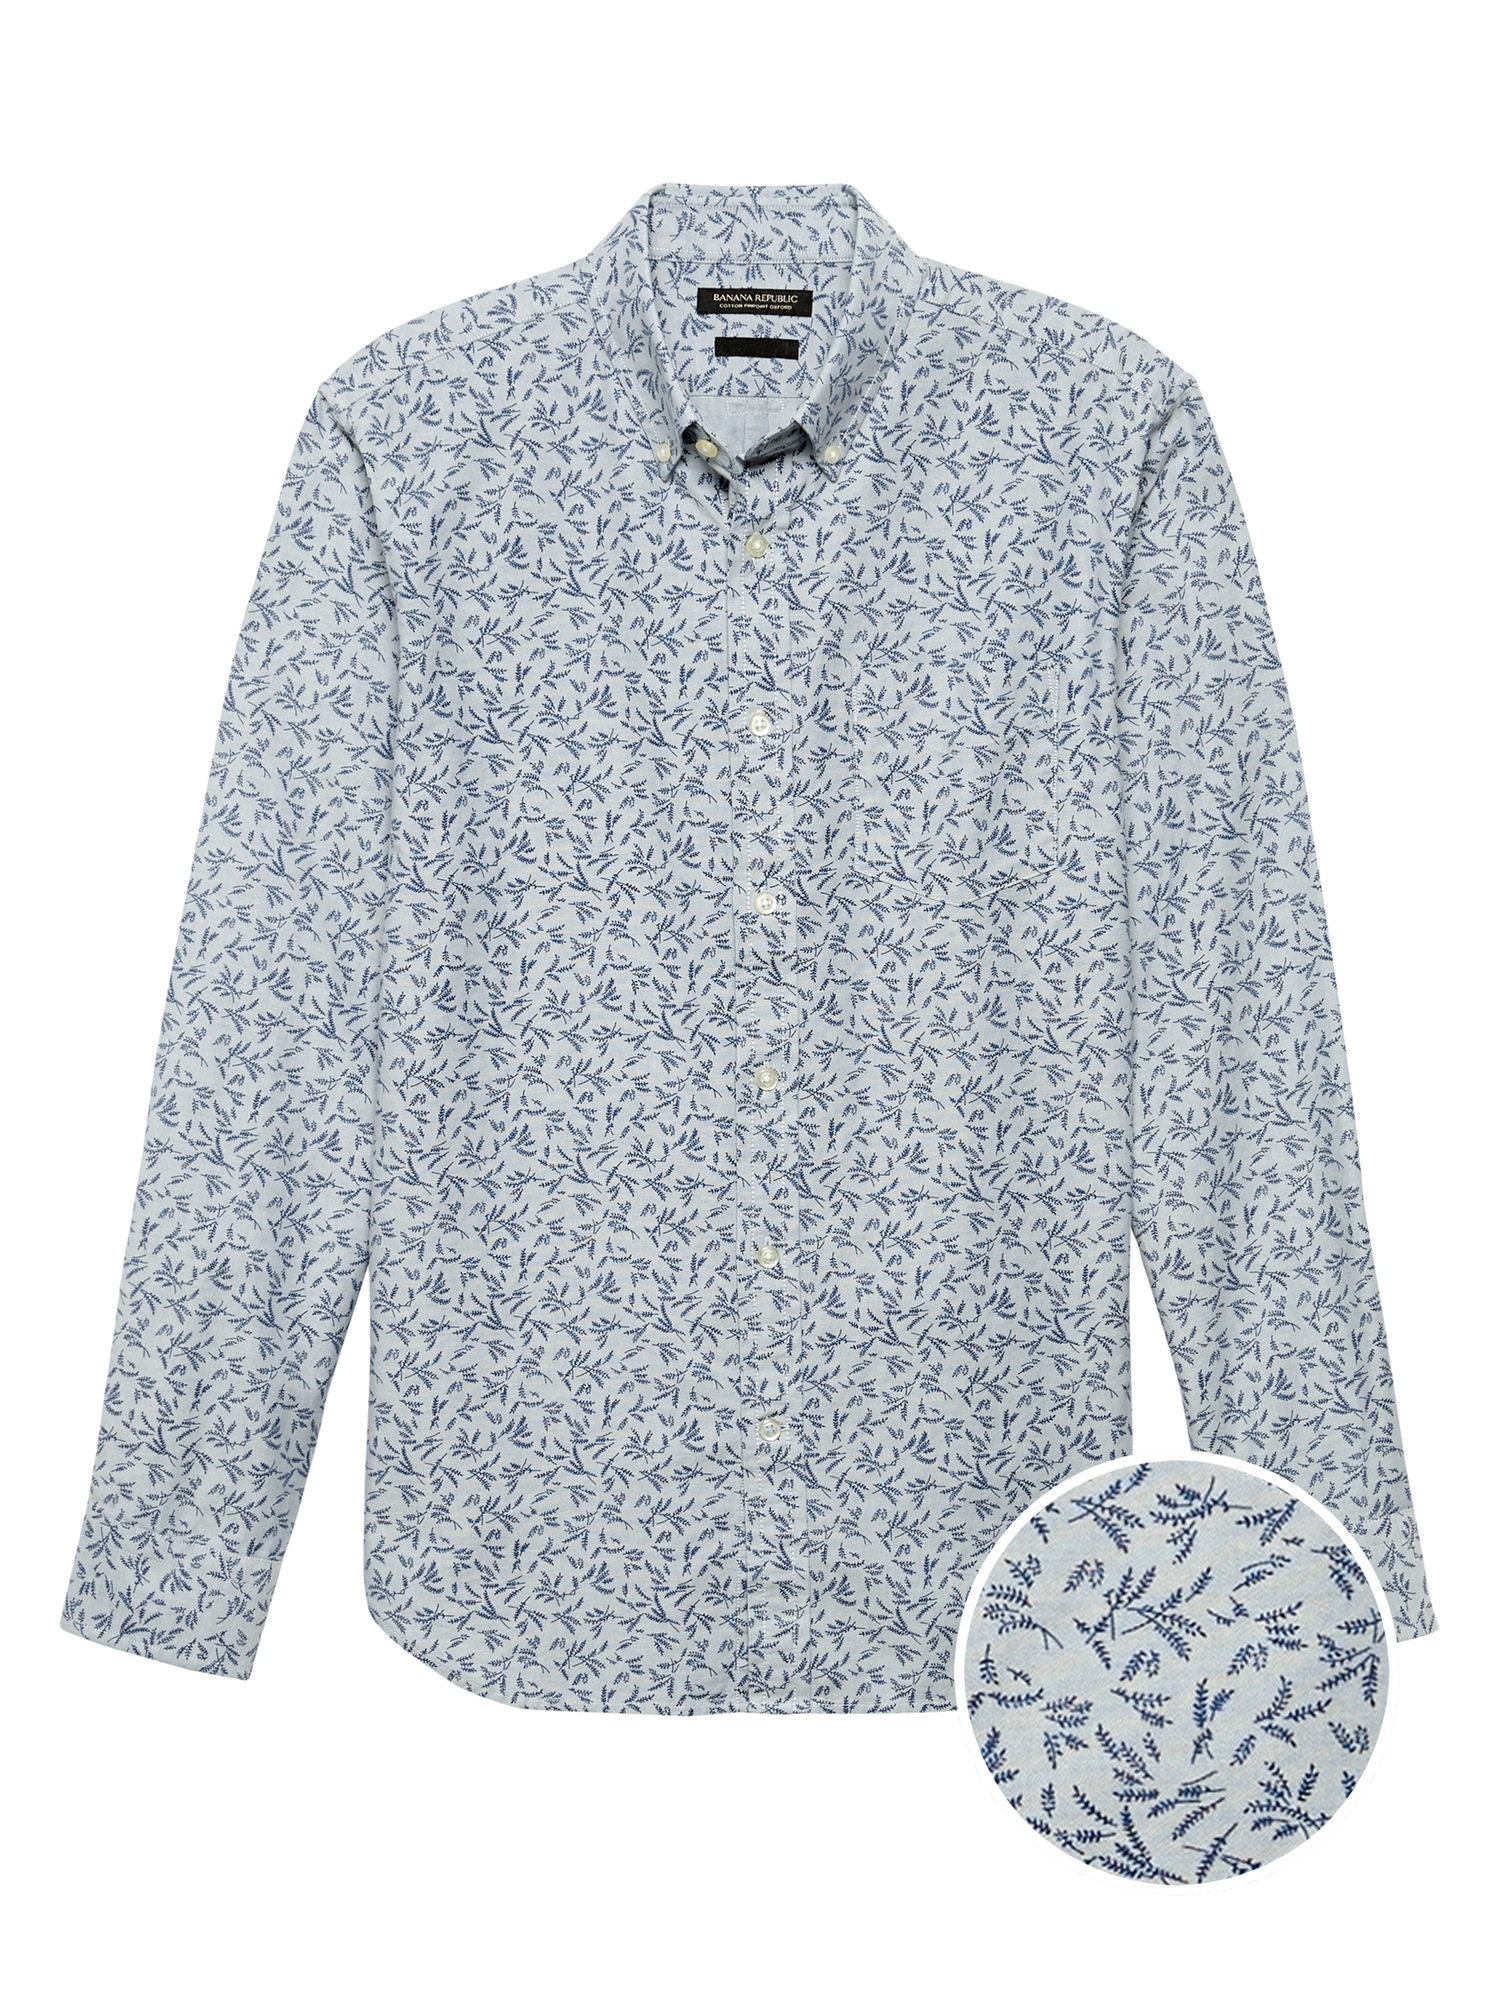 Slim-Fit Cotton Oxford Shirt